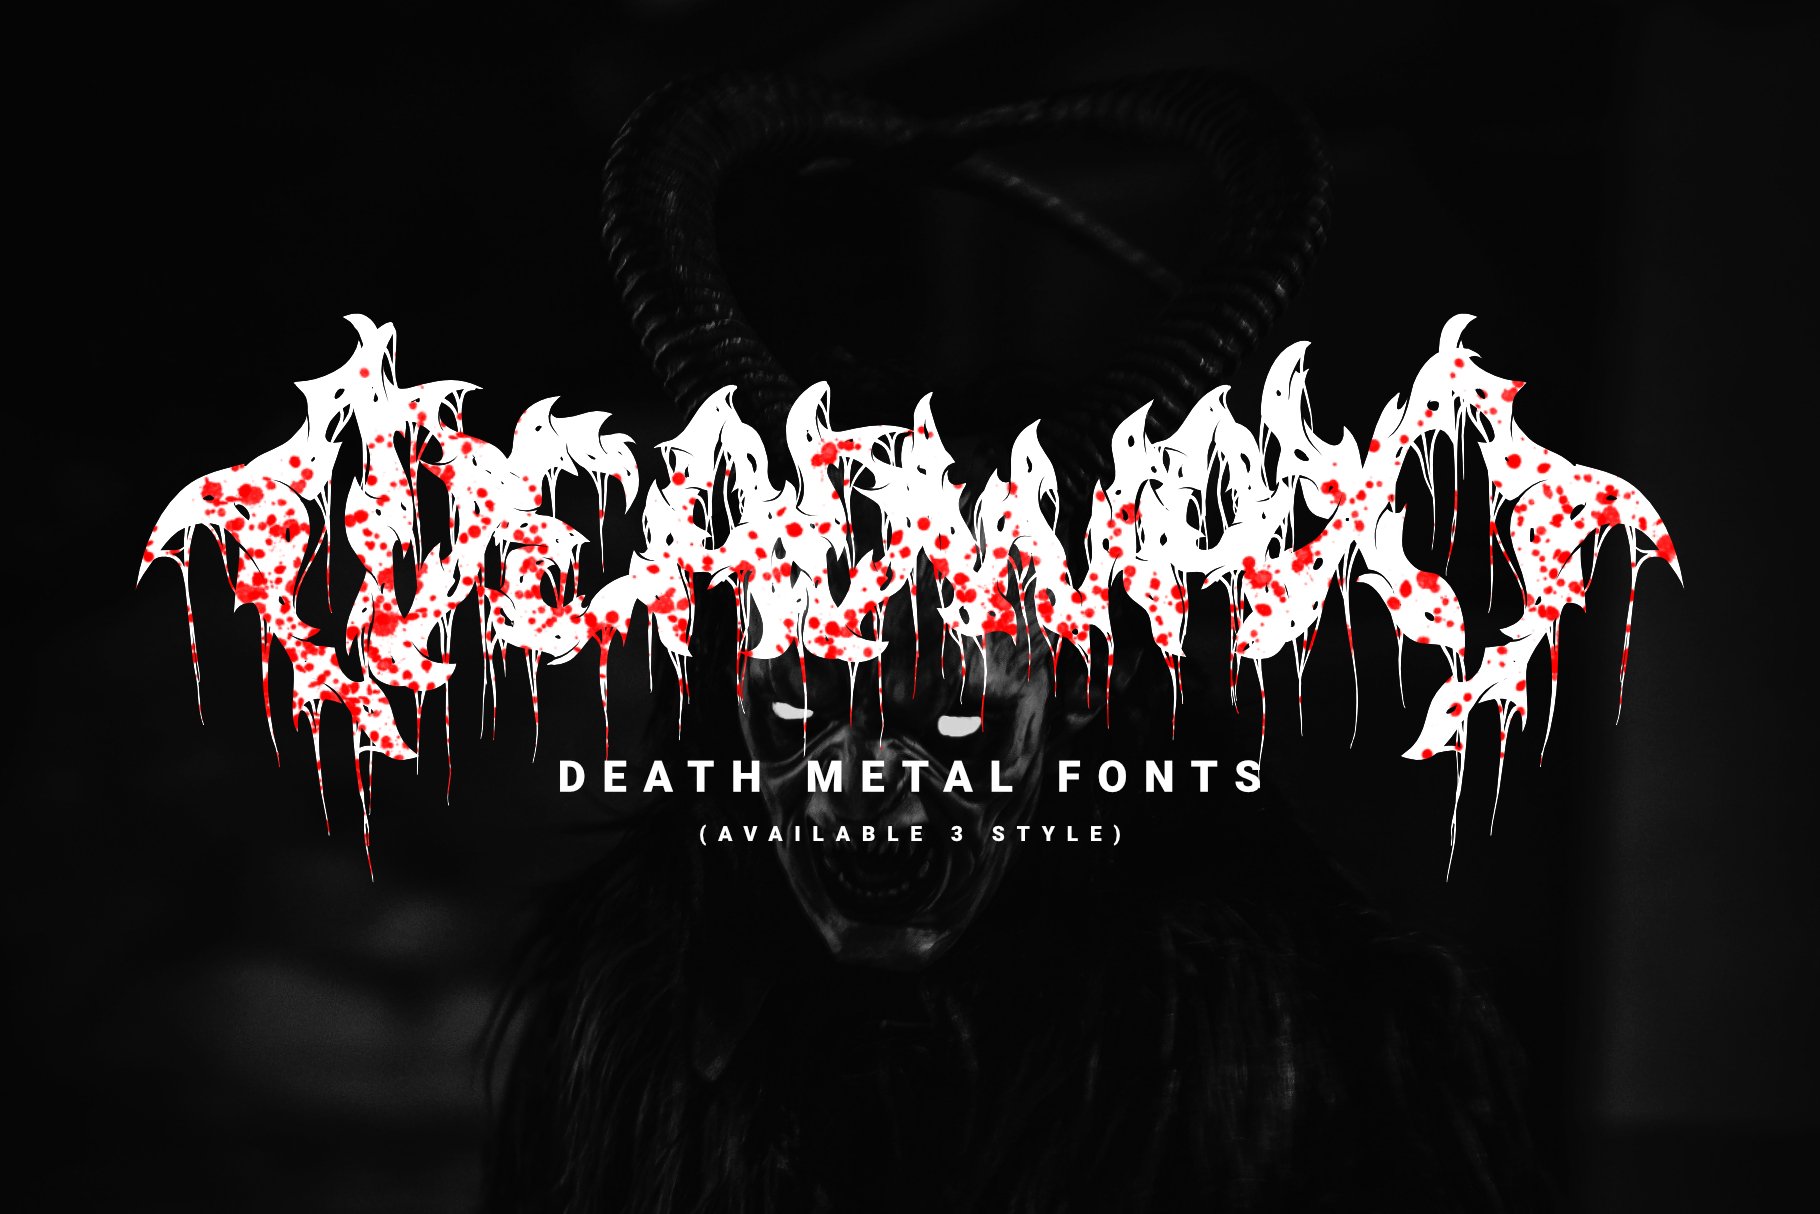 Deadwax - Death Metal Fonts cover image.